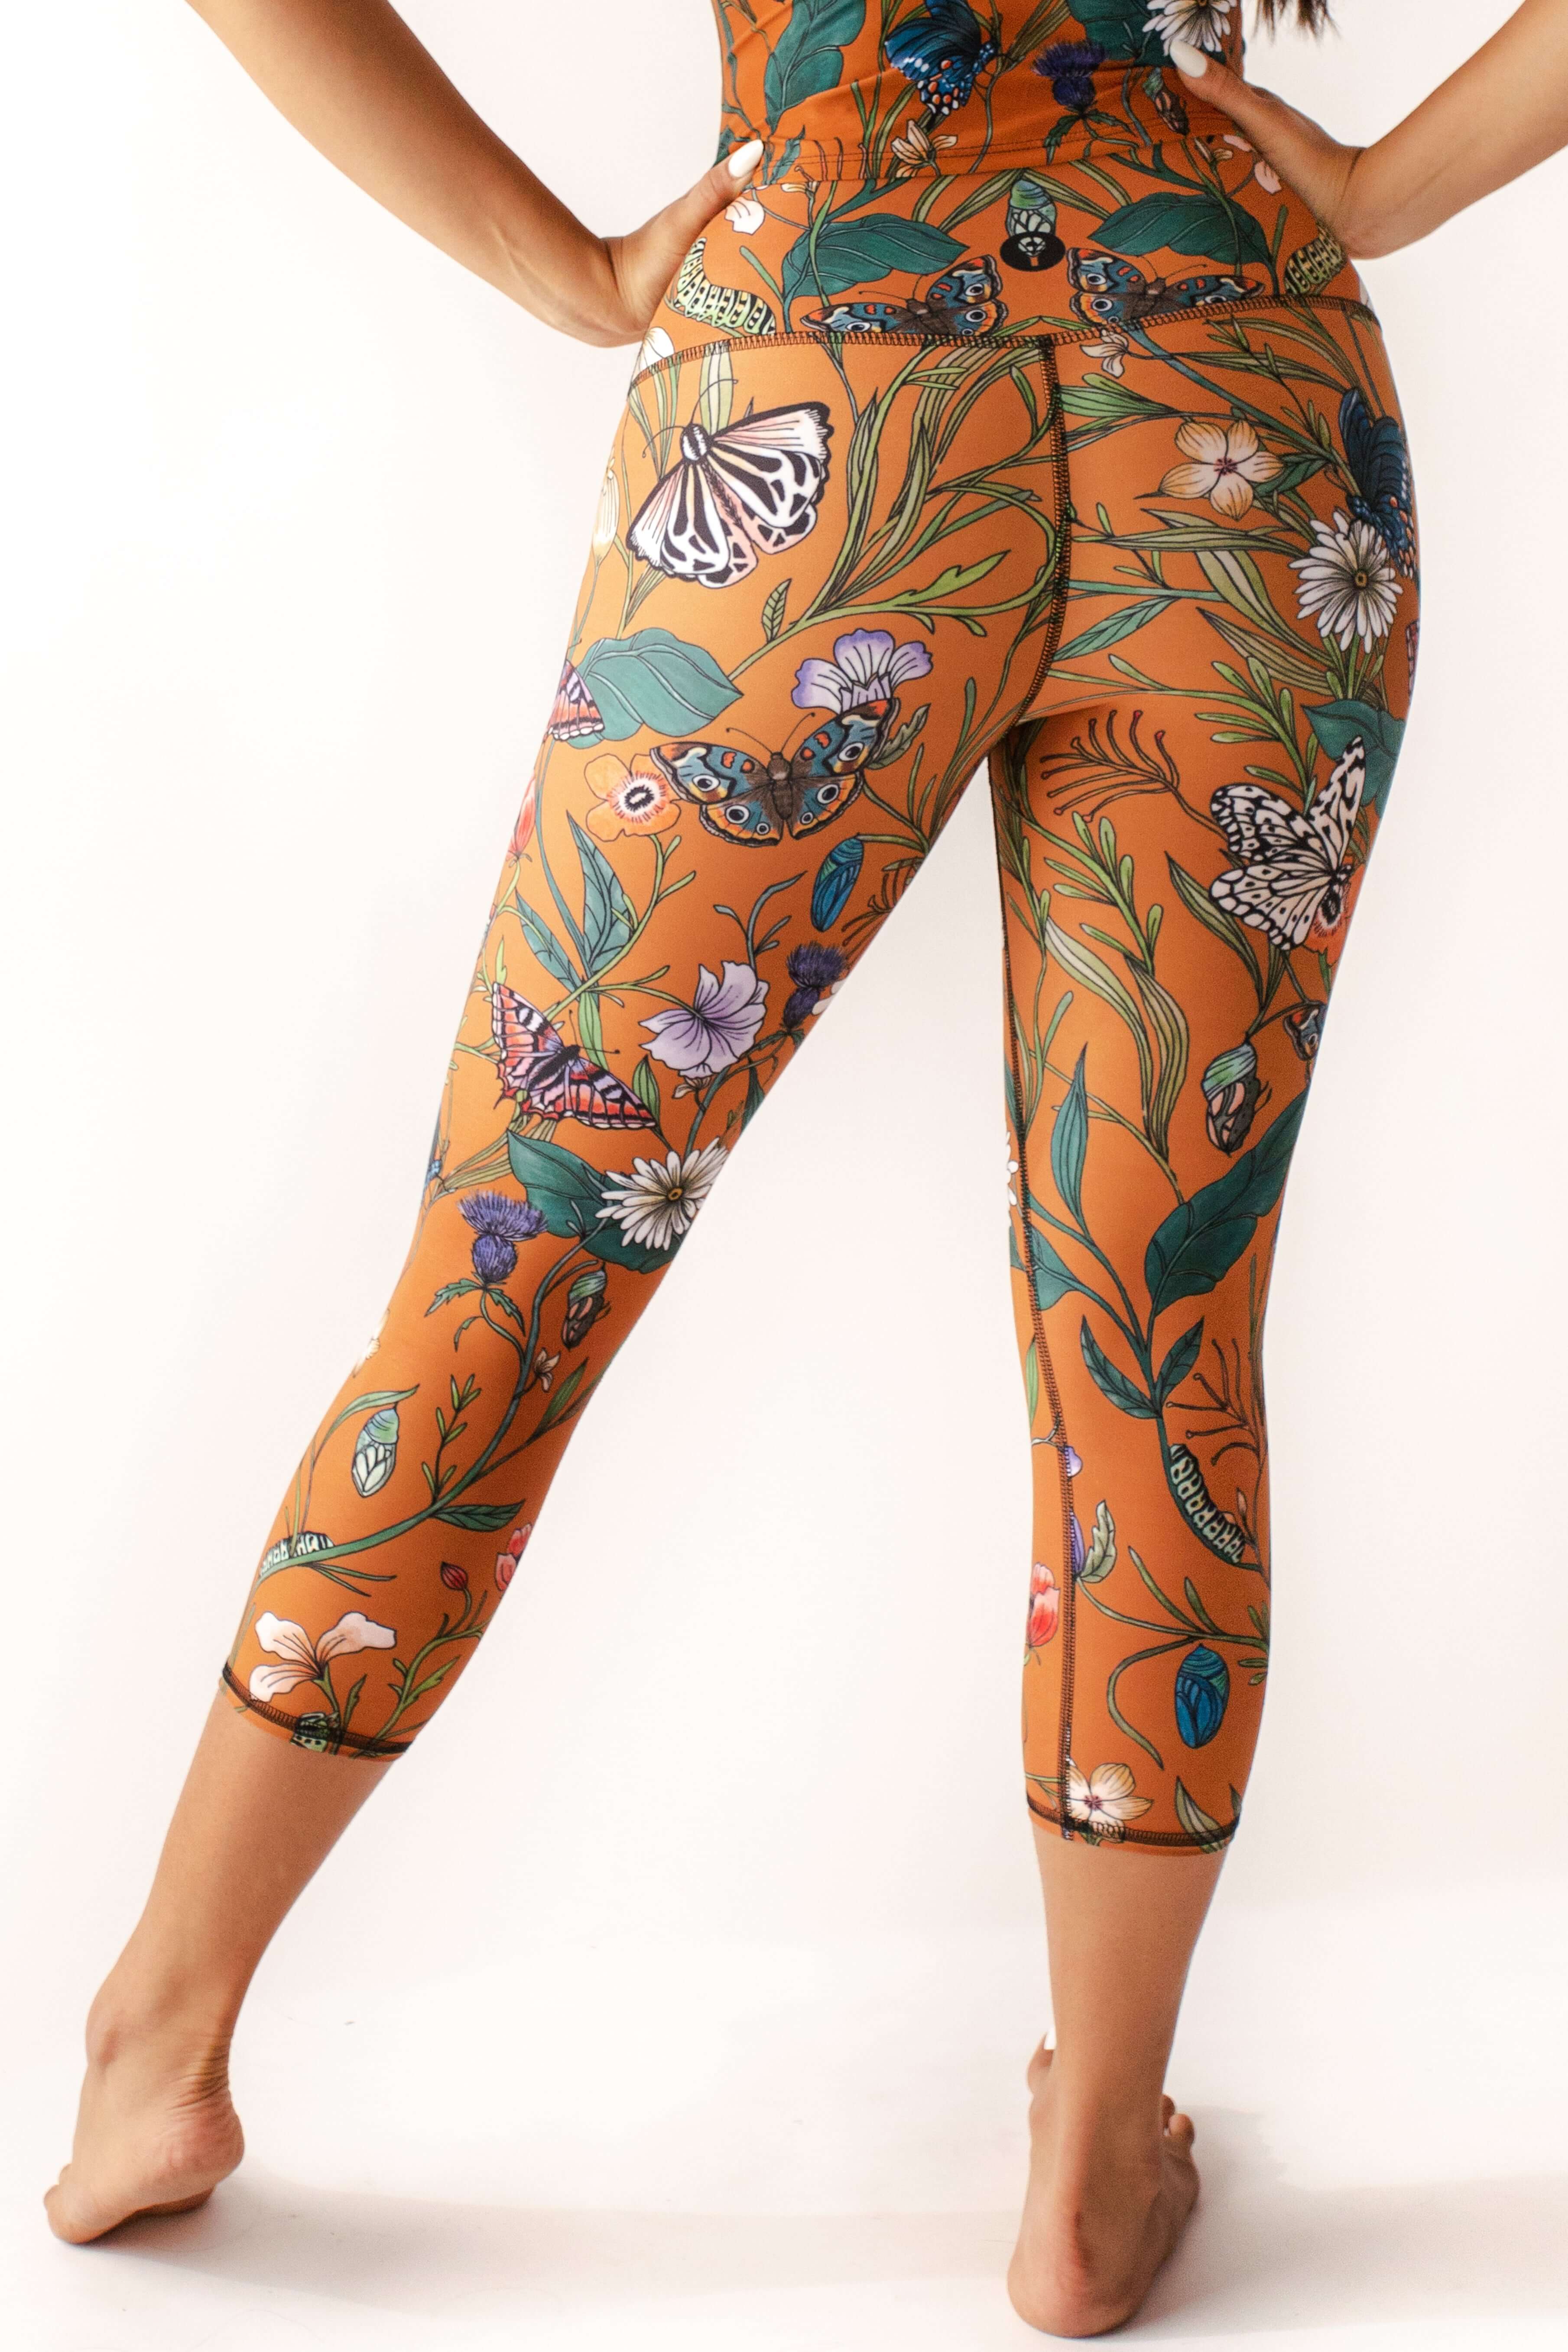 Flower Bomb Yoga Democracy Recycled Biker Shorts - Women - Yoga Specials